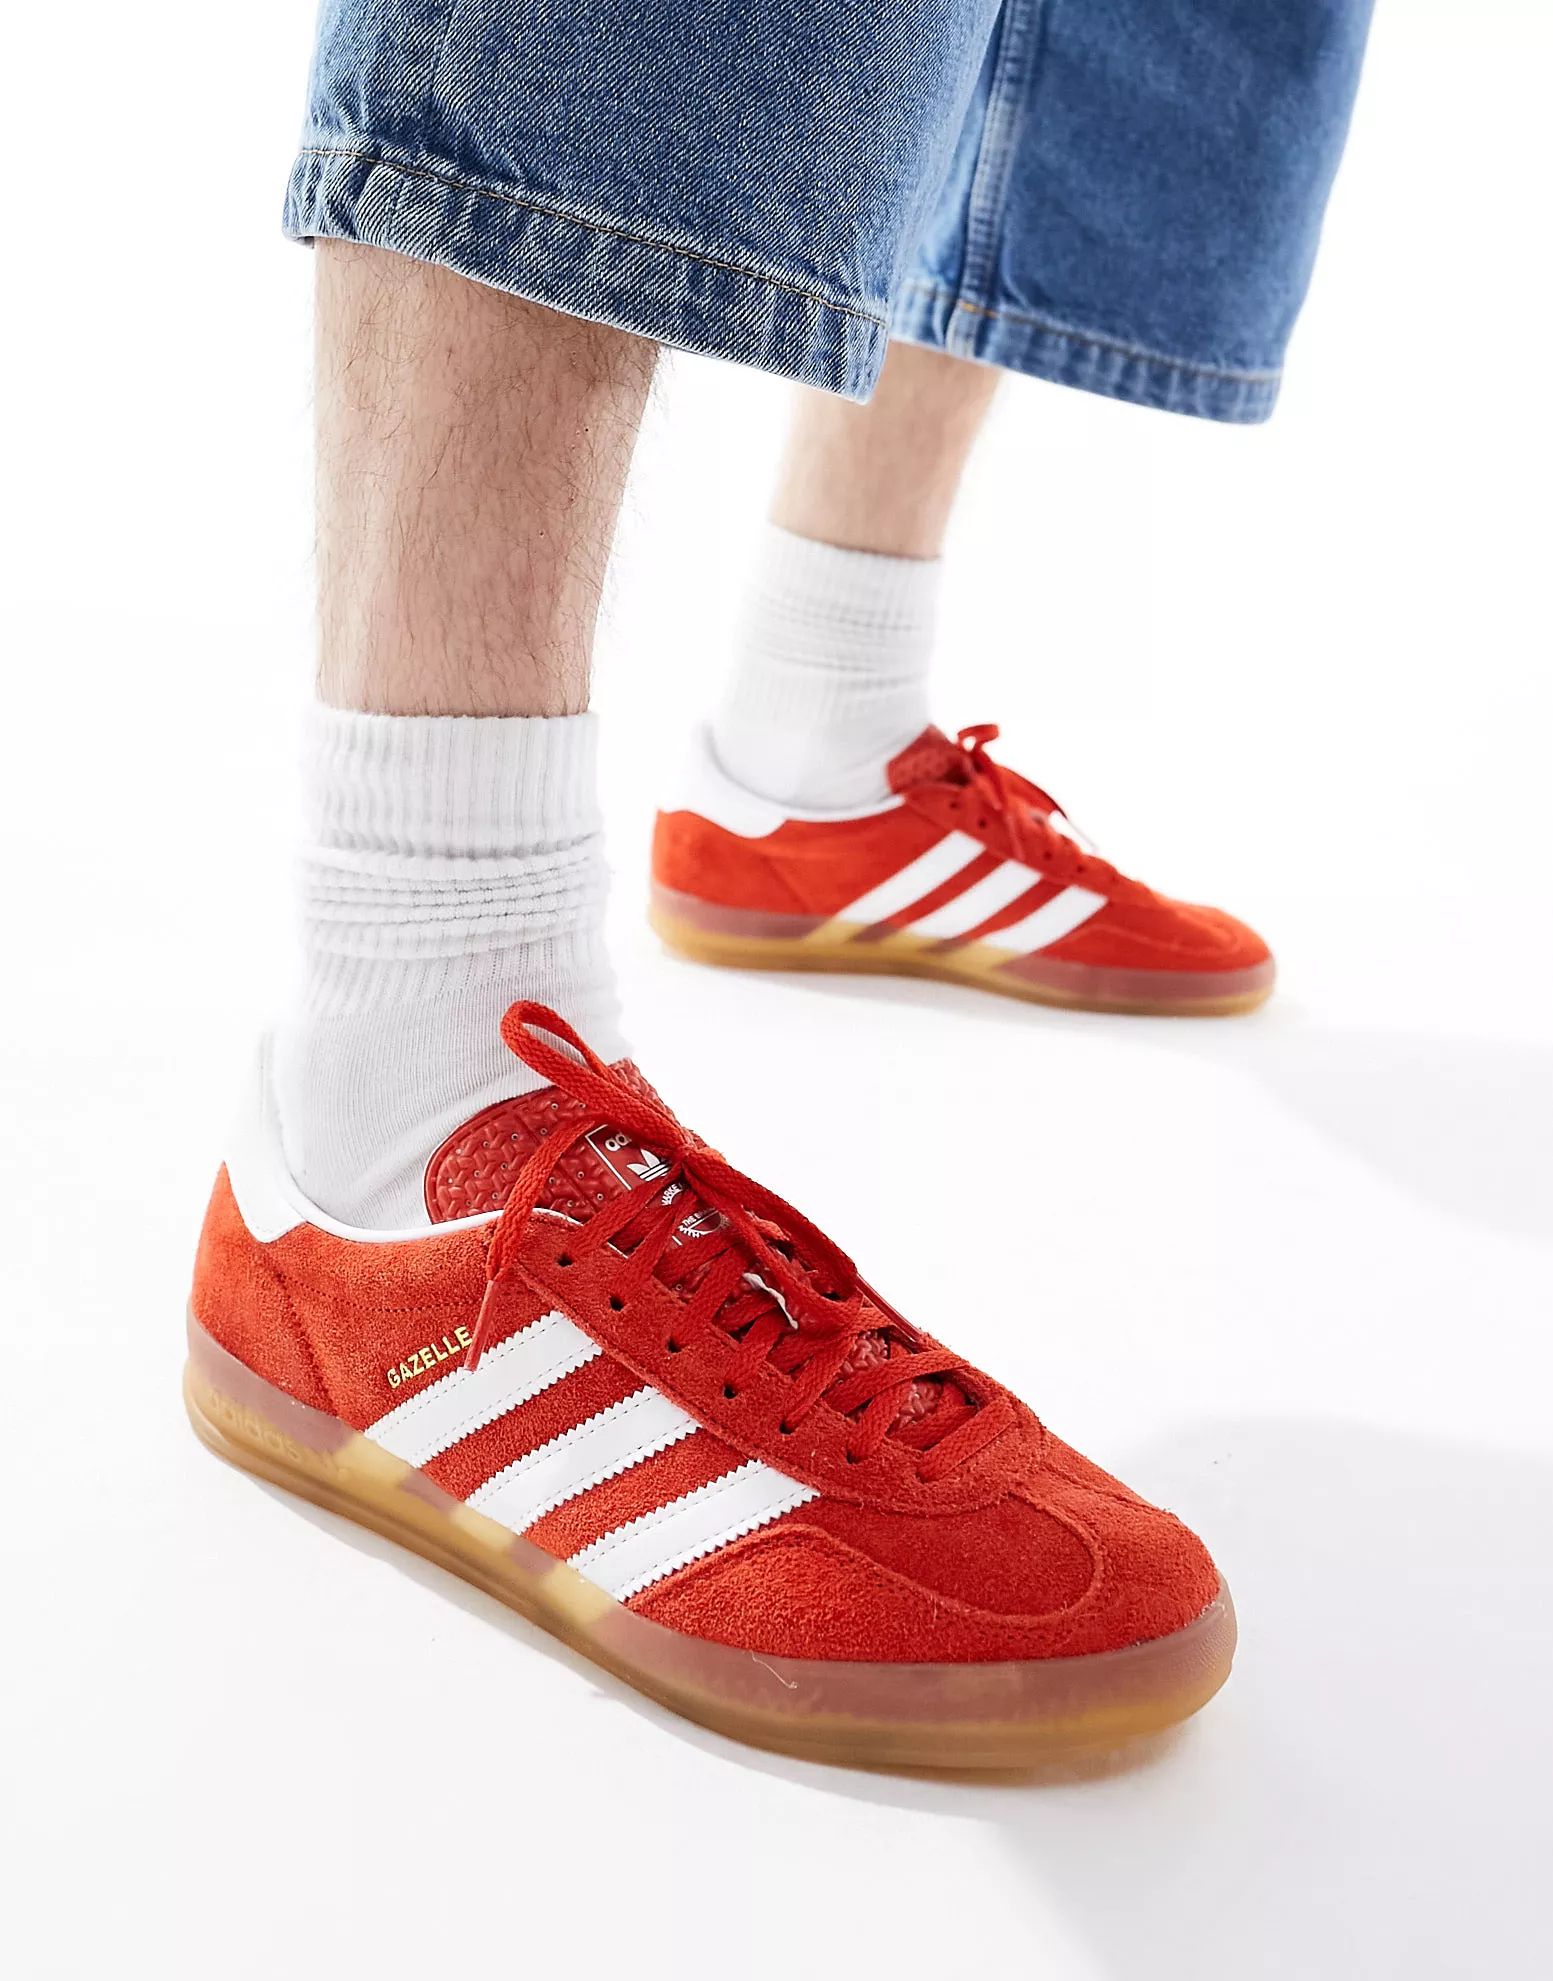 adidas Originals - Gazelle Indoor - Sneakers rosse con suola in gomma | ASOS (Global)